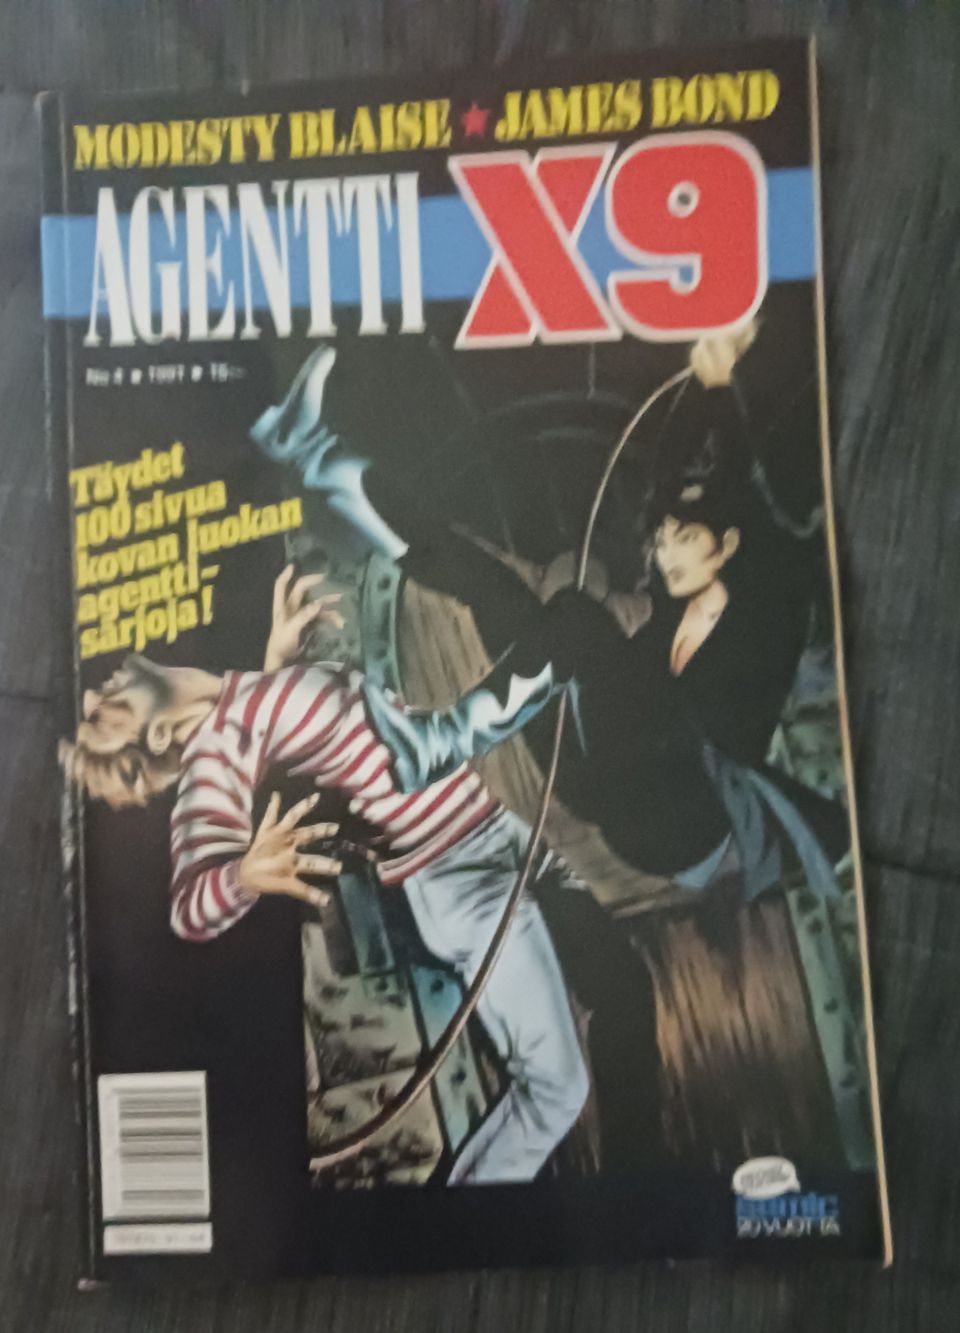 AGENTTI X9 No 4 1991